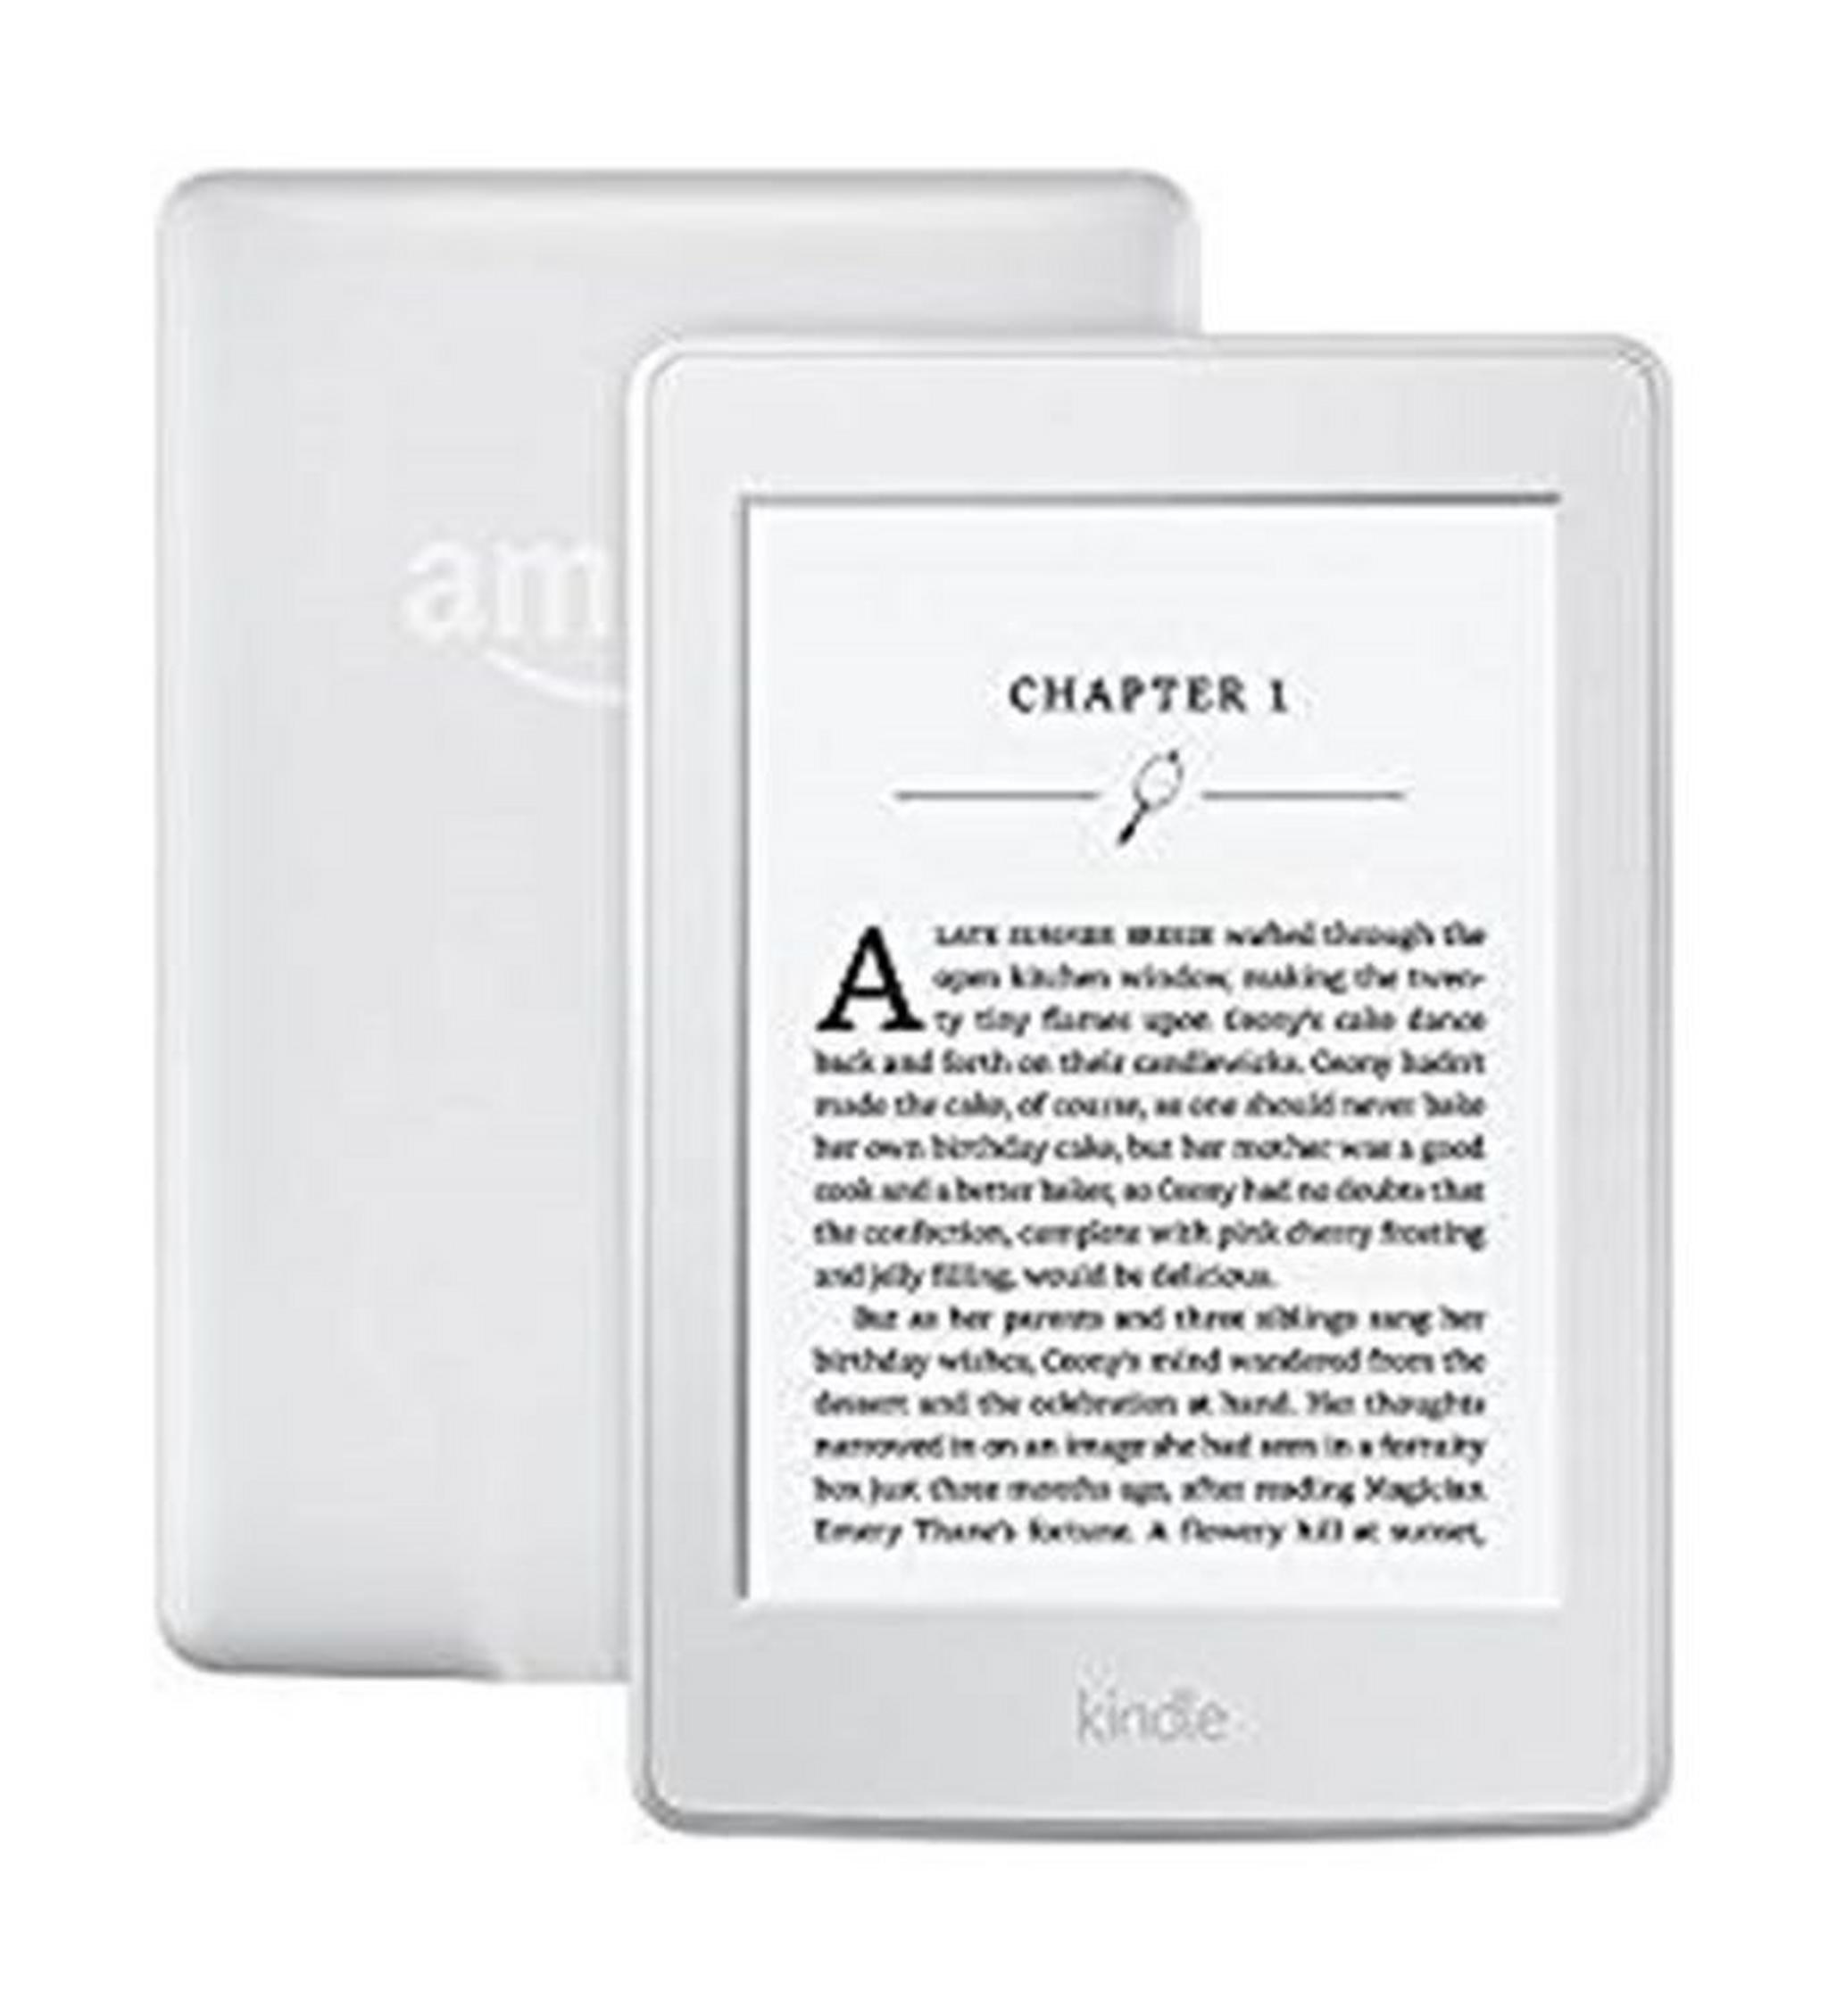 Amazon Kindle Paperwhite 6-inch E-Reader Tablet - White